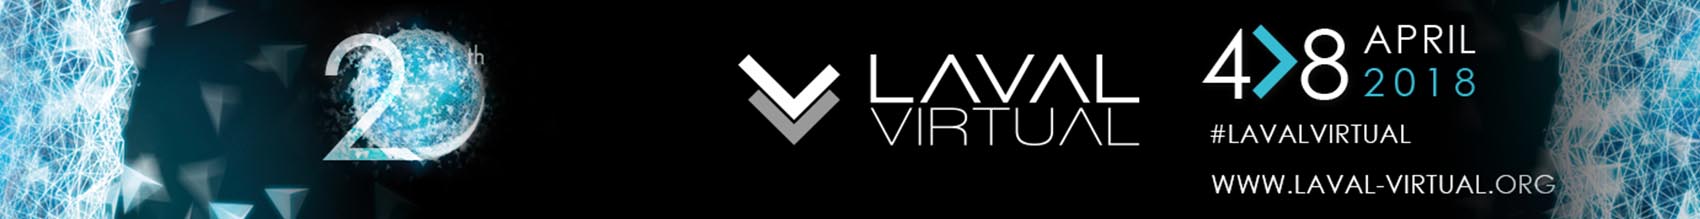 Laval Virtual 2018_Prototypage virtuel_web banner